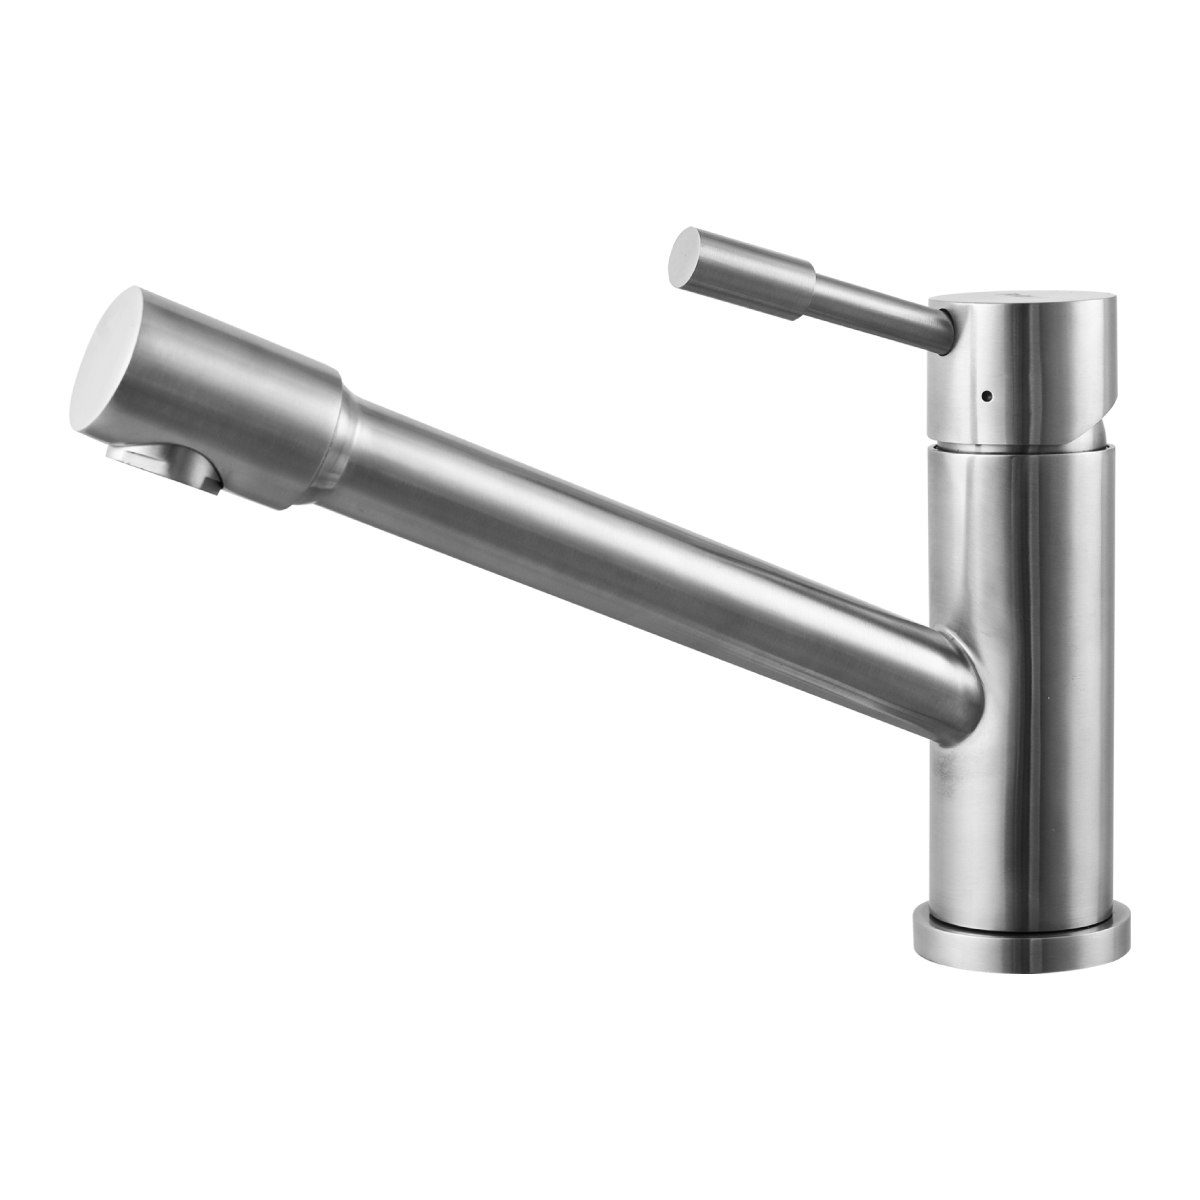 LM5072S Kitchen faucet
with swivel spout